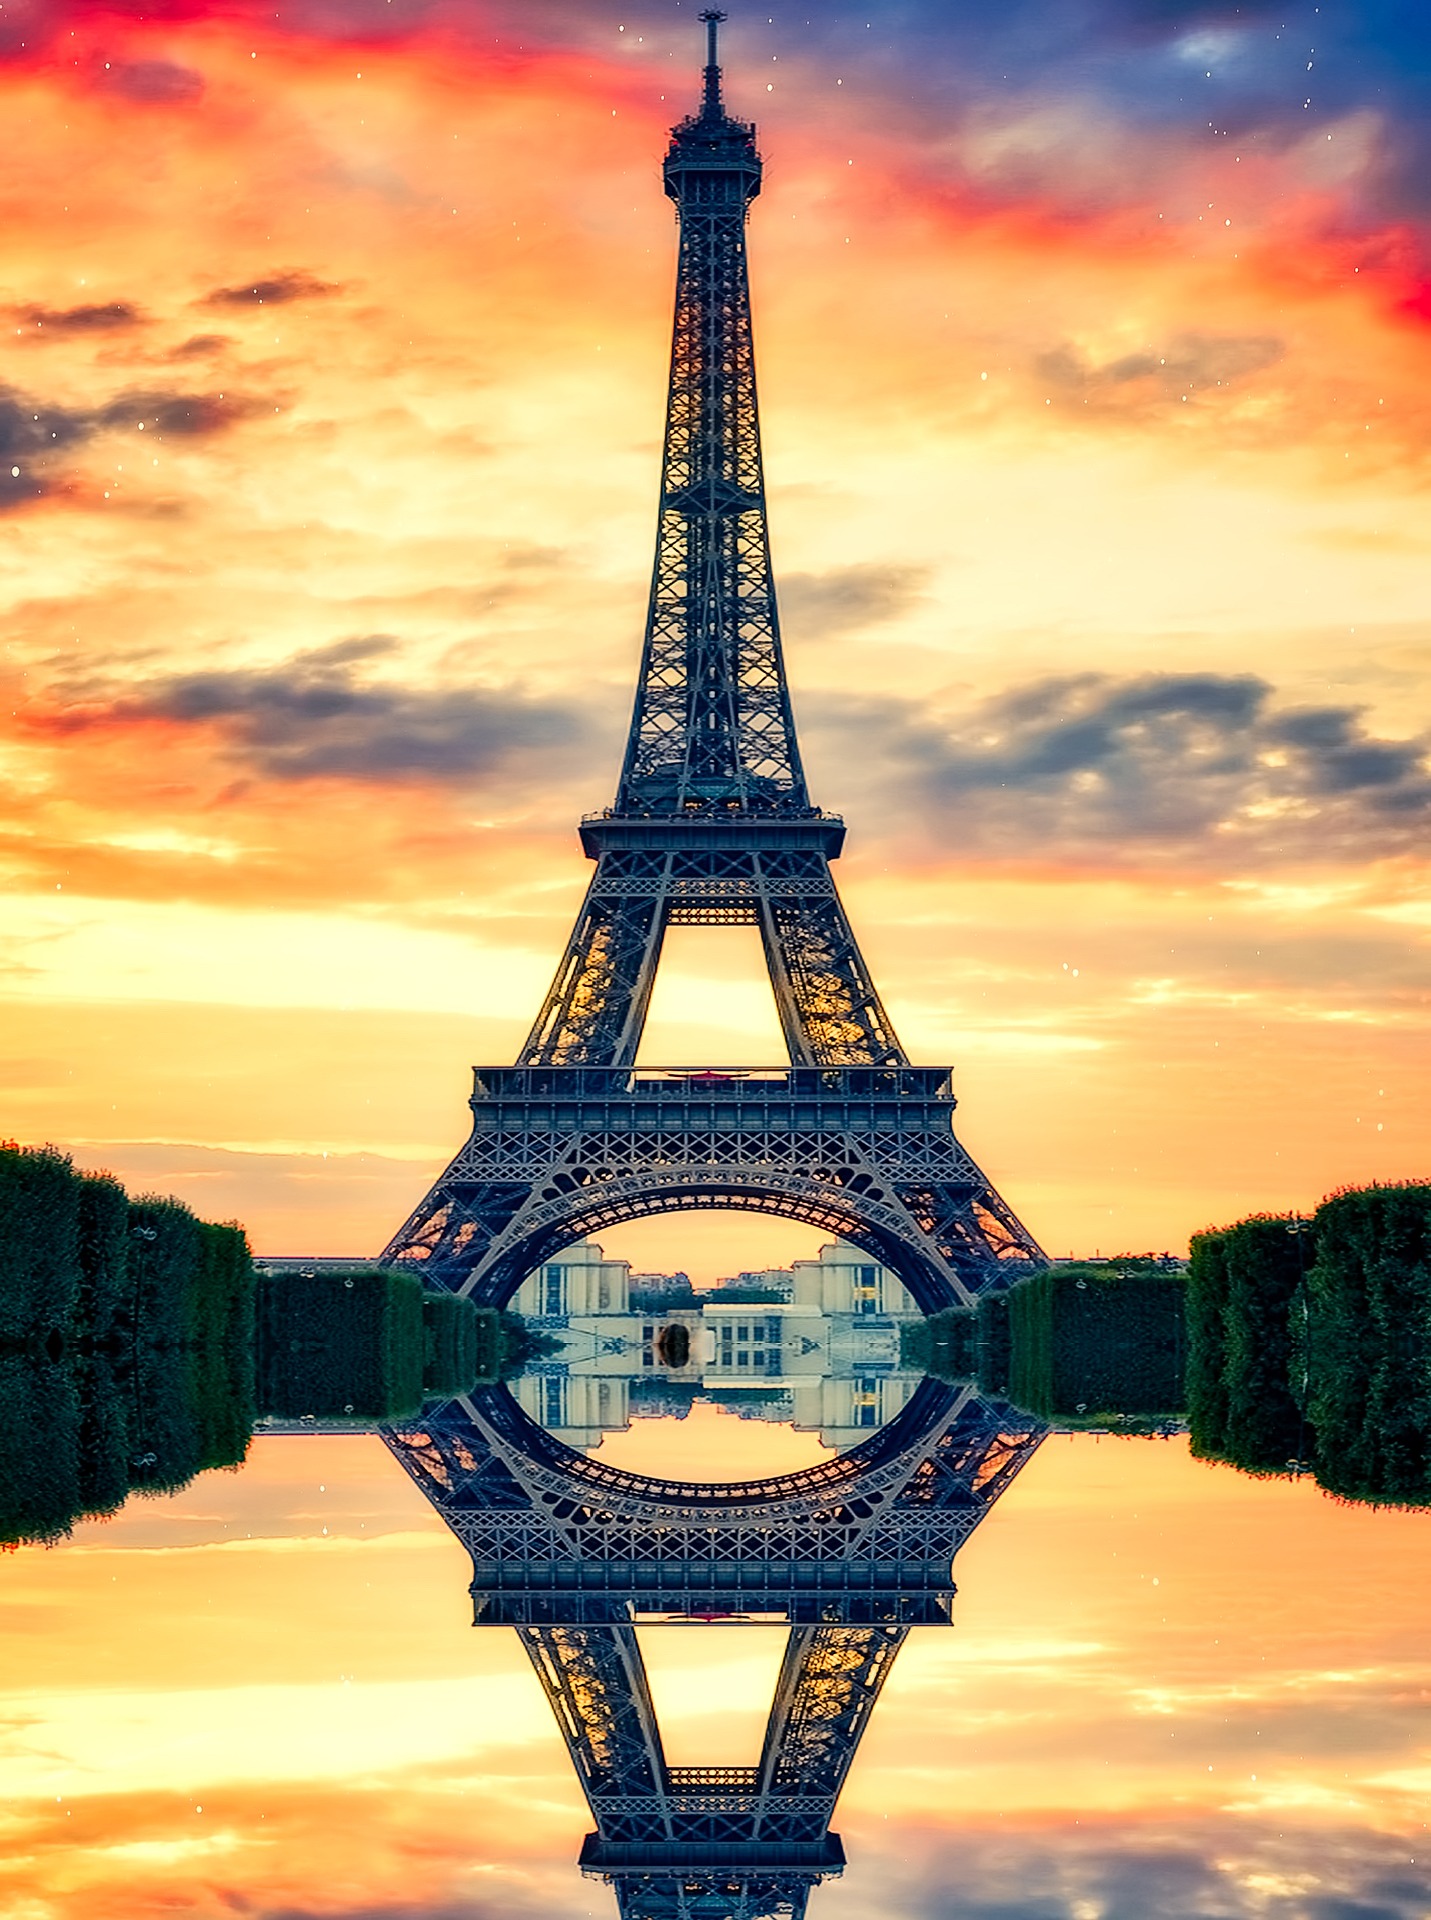 Eiffel Tower lit by an orange sunset